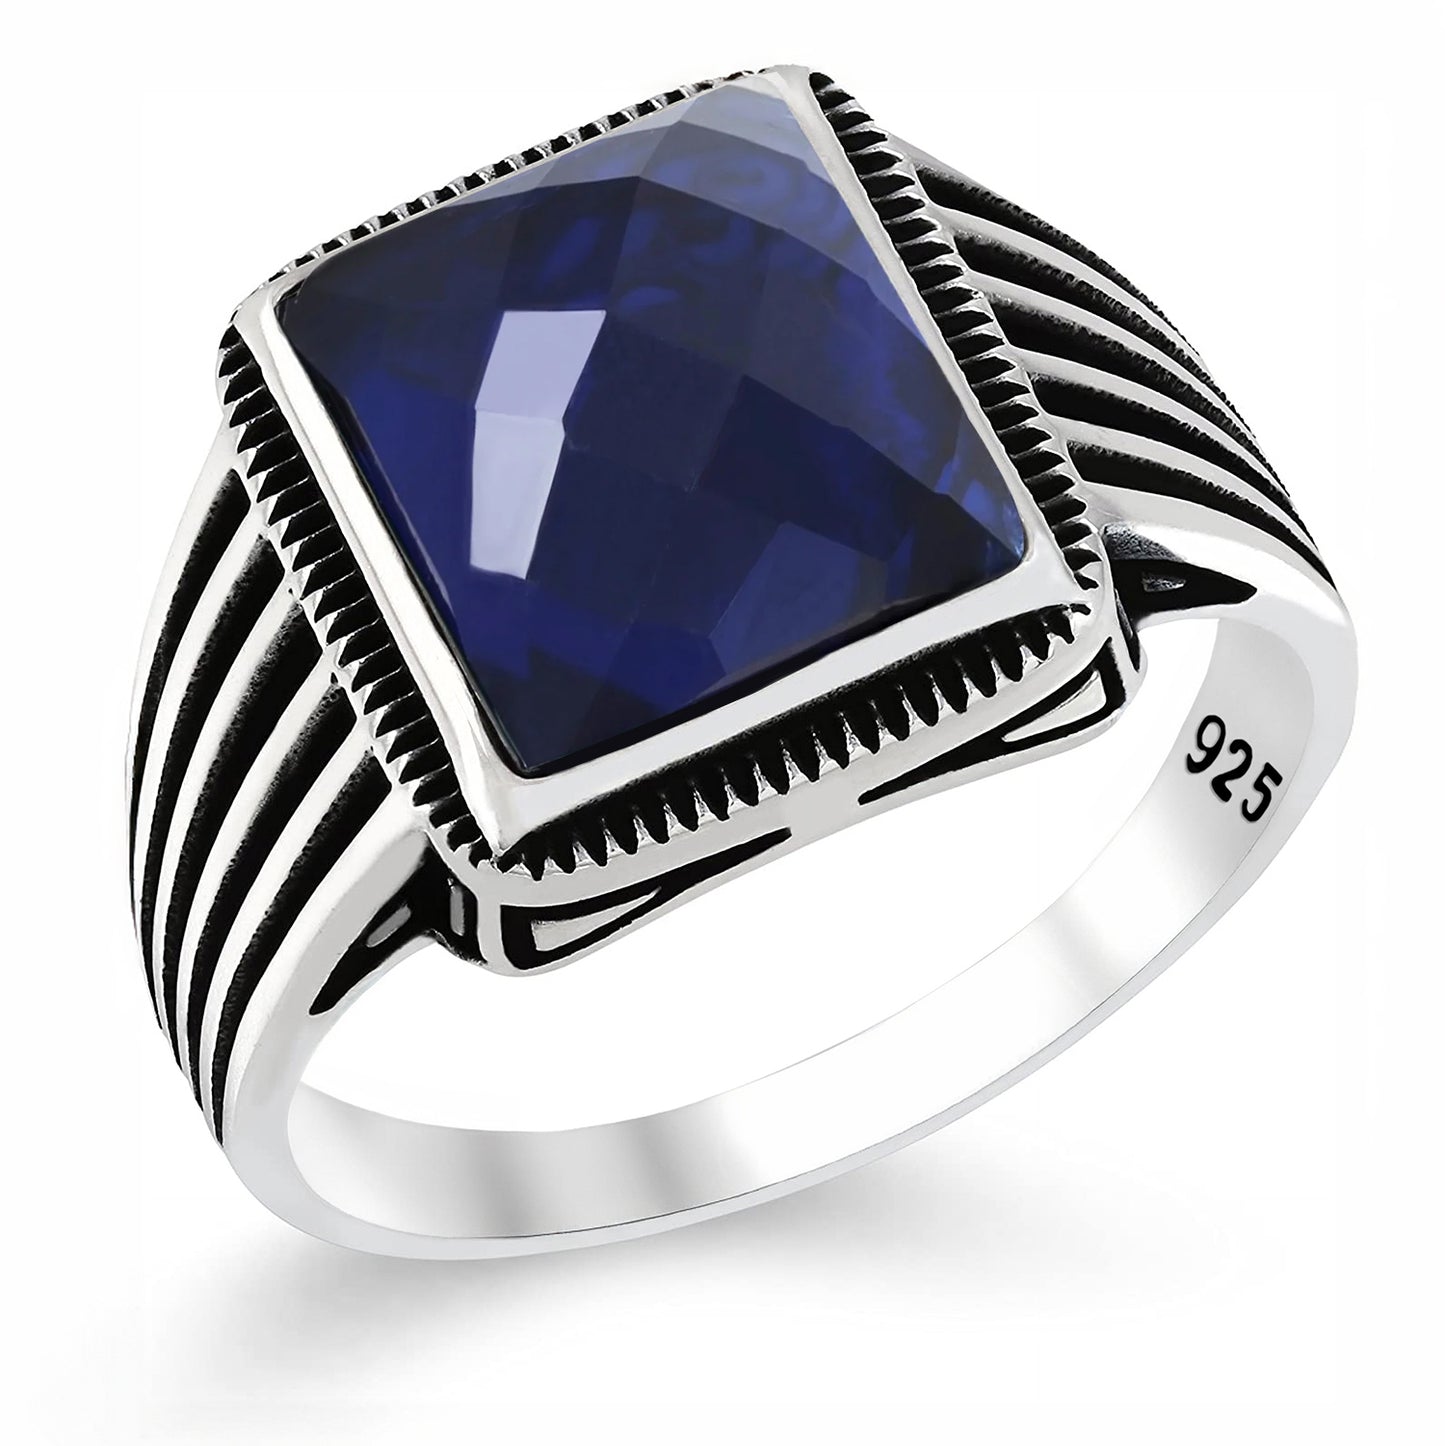 Chimoda Striped Pattern Sterling Silver Ring for Men Blue CZ Stone